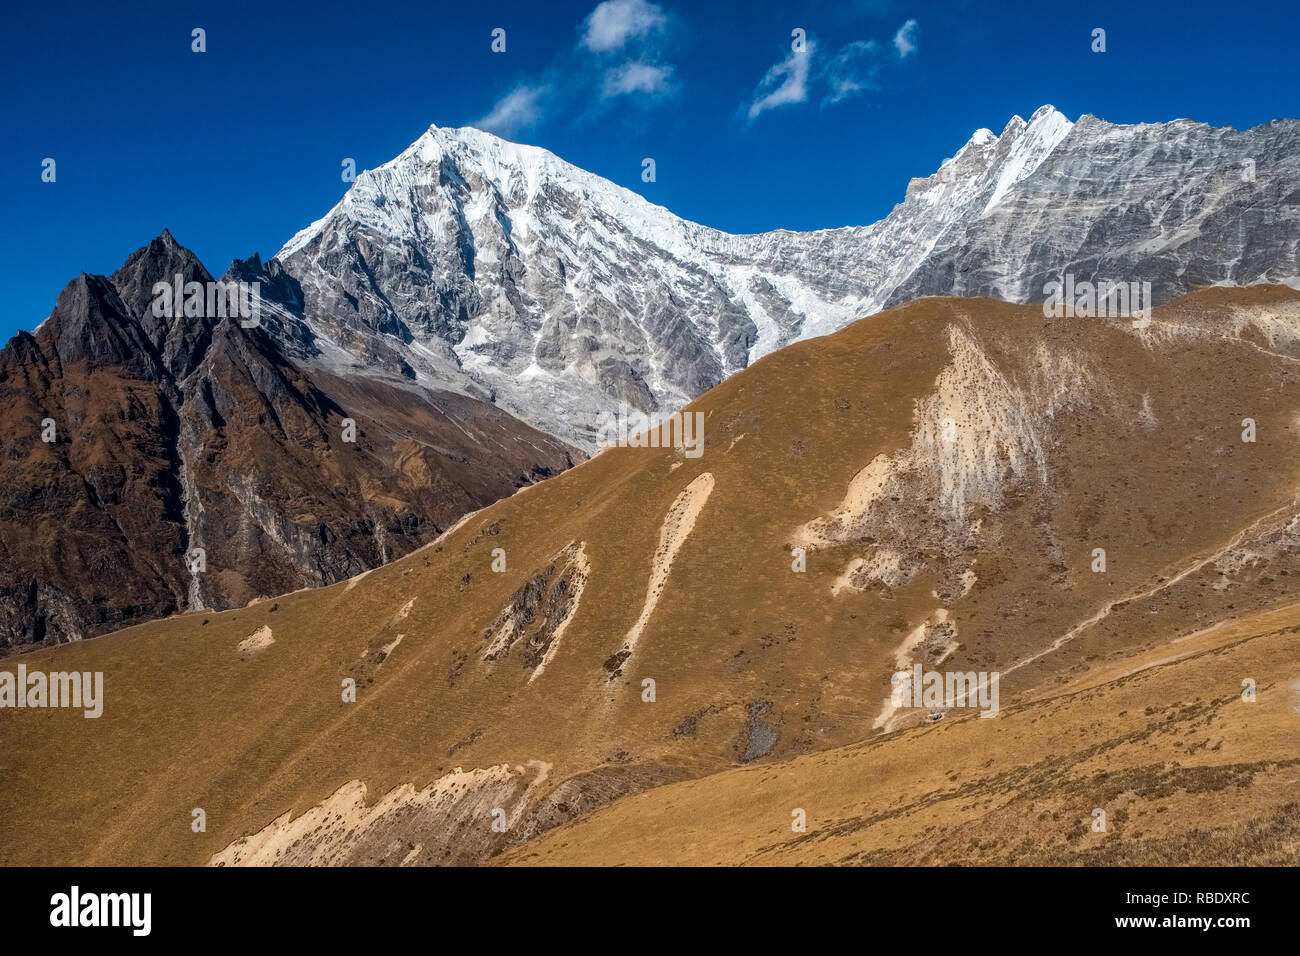 El Langtang Himalaya y el popular mirador de Kyanjin Ri, Nepal Foto de stock